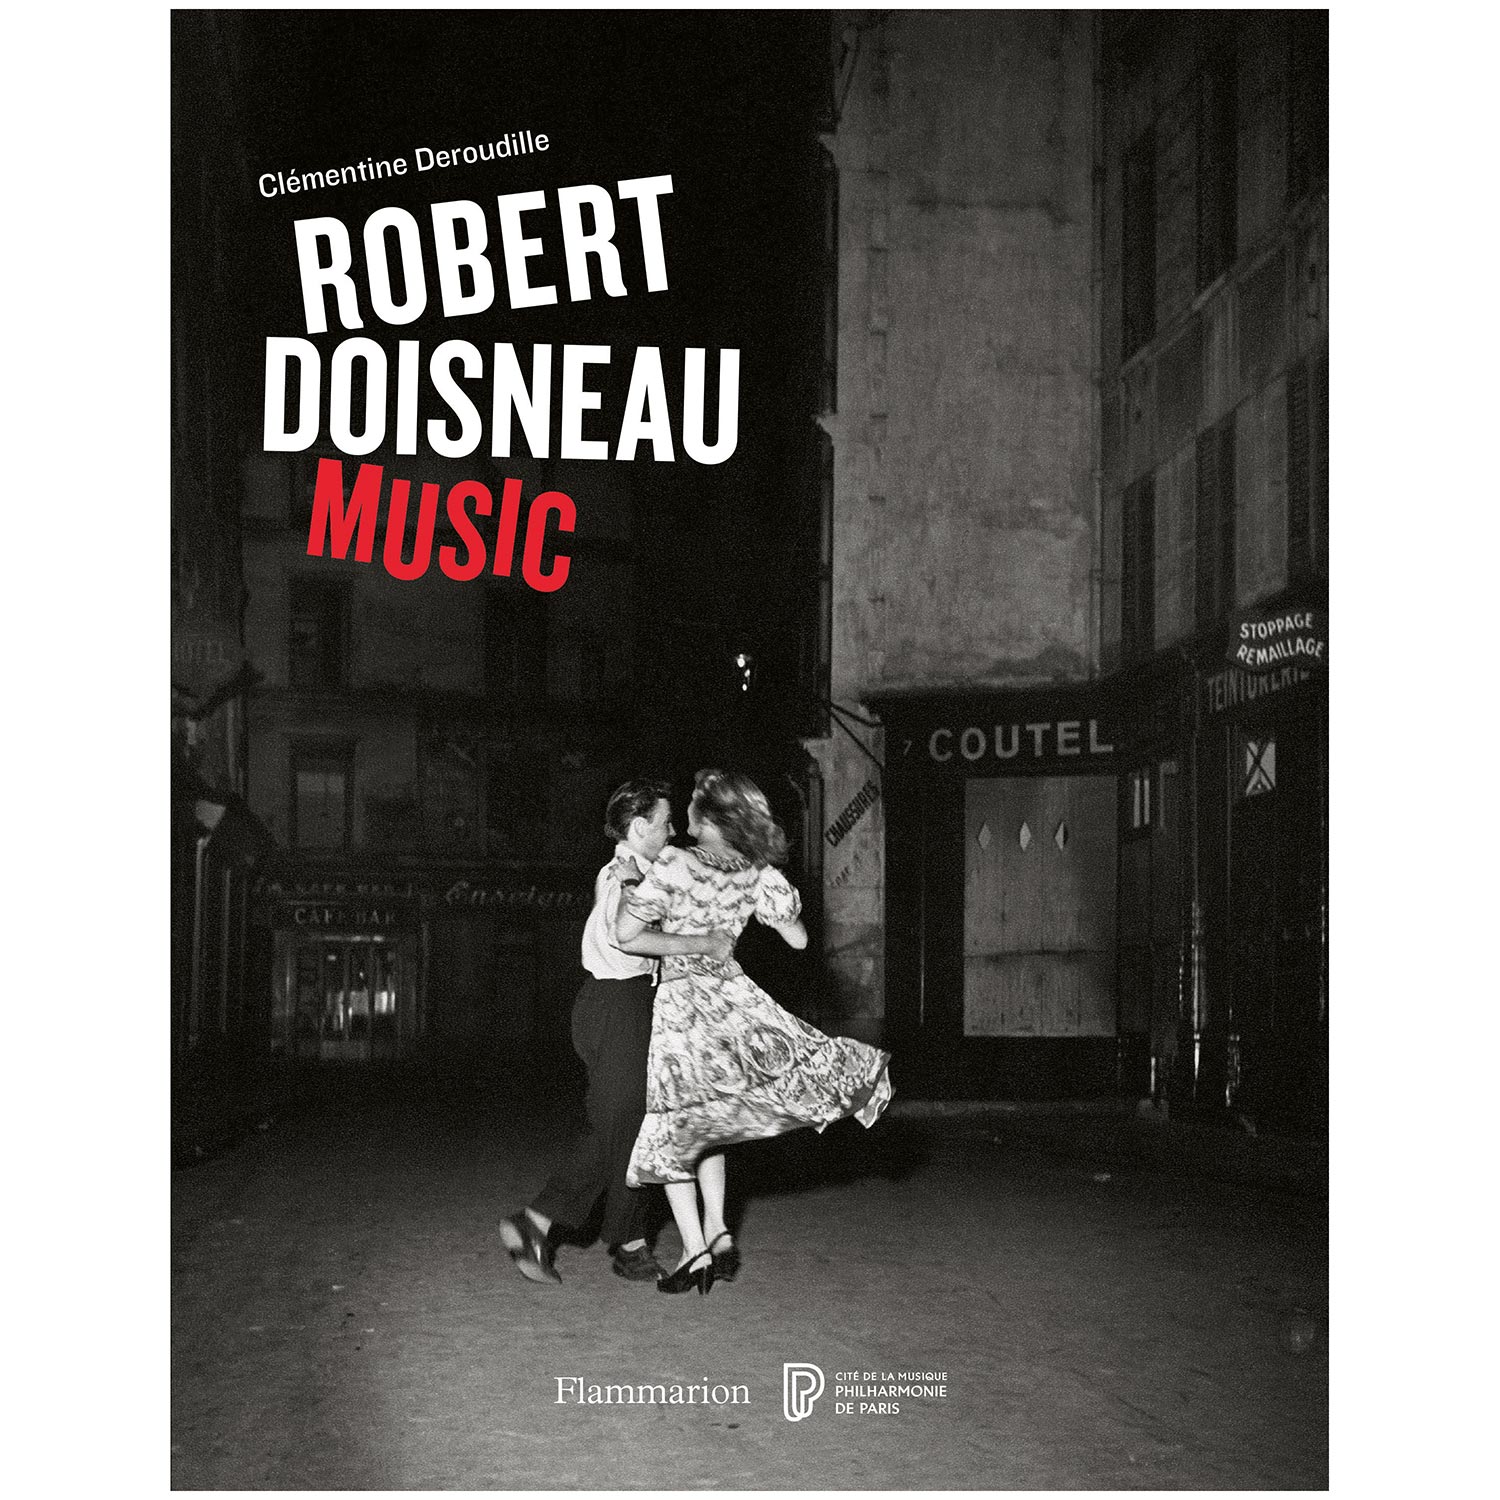 TThumbnail image for Clémentine Deroudille - Robert Doisneau - Music